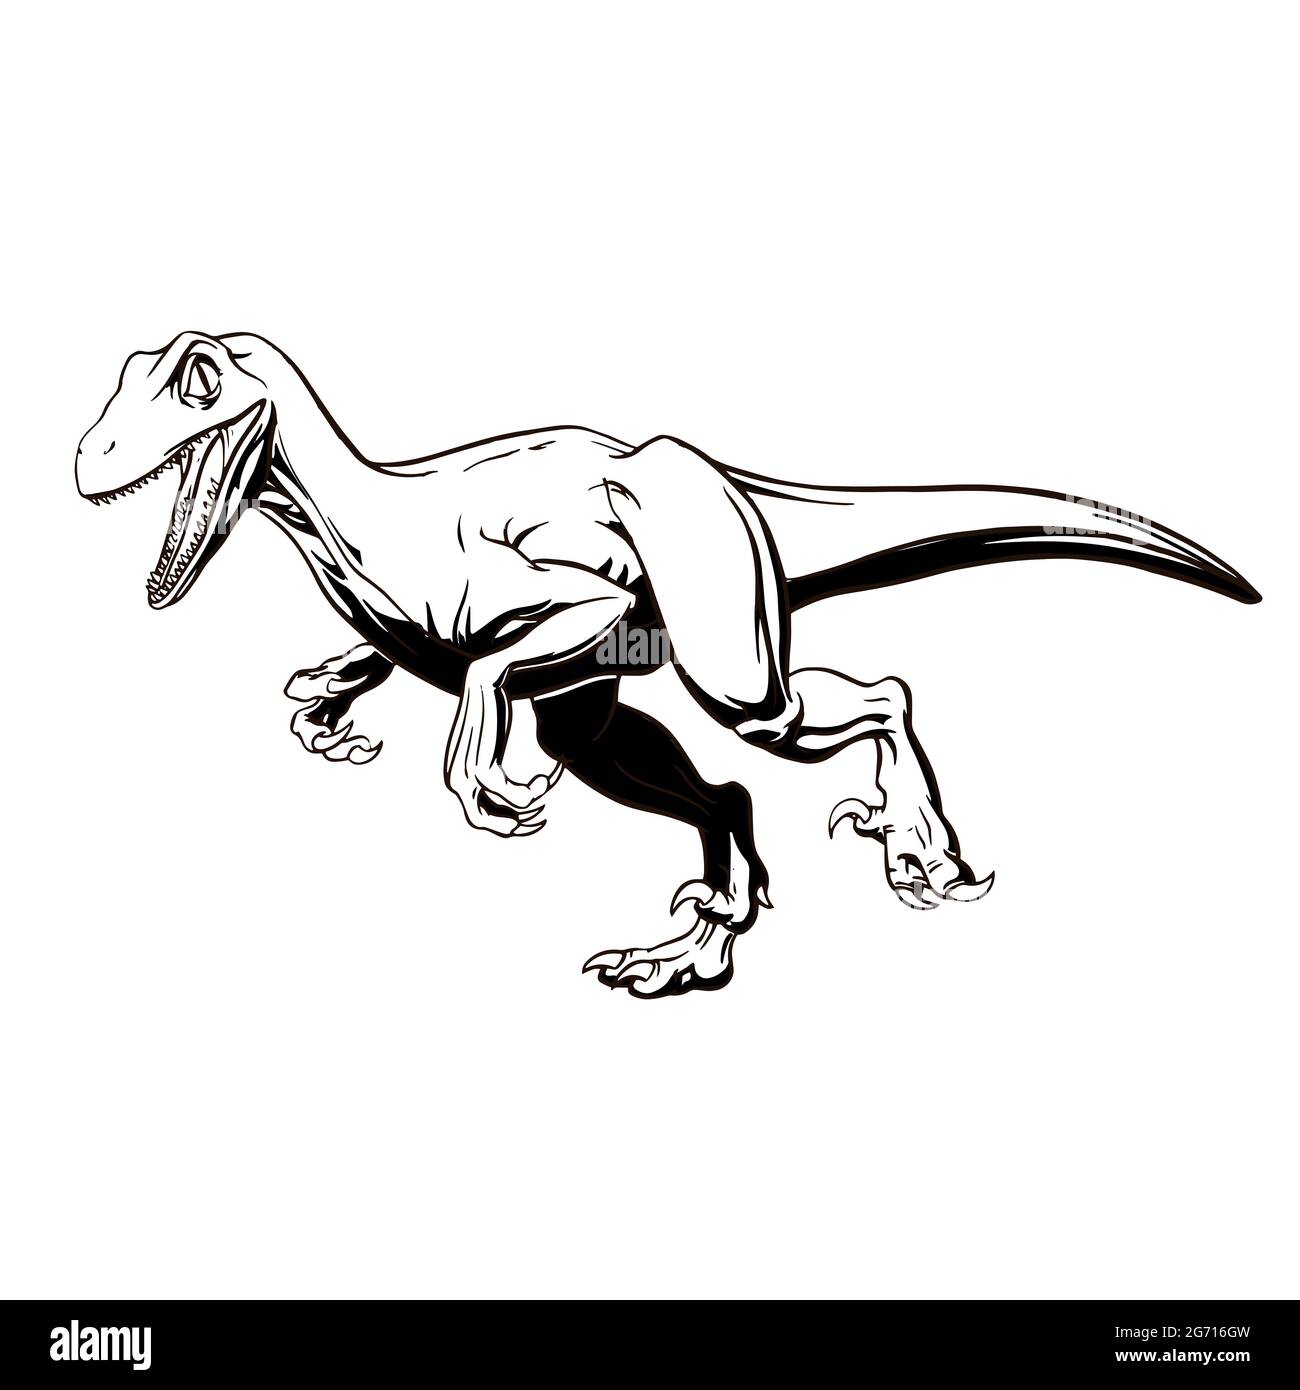 134 Black Velociraptor Tattoo Images Stock Photos  Vectors  Shutterstock